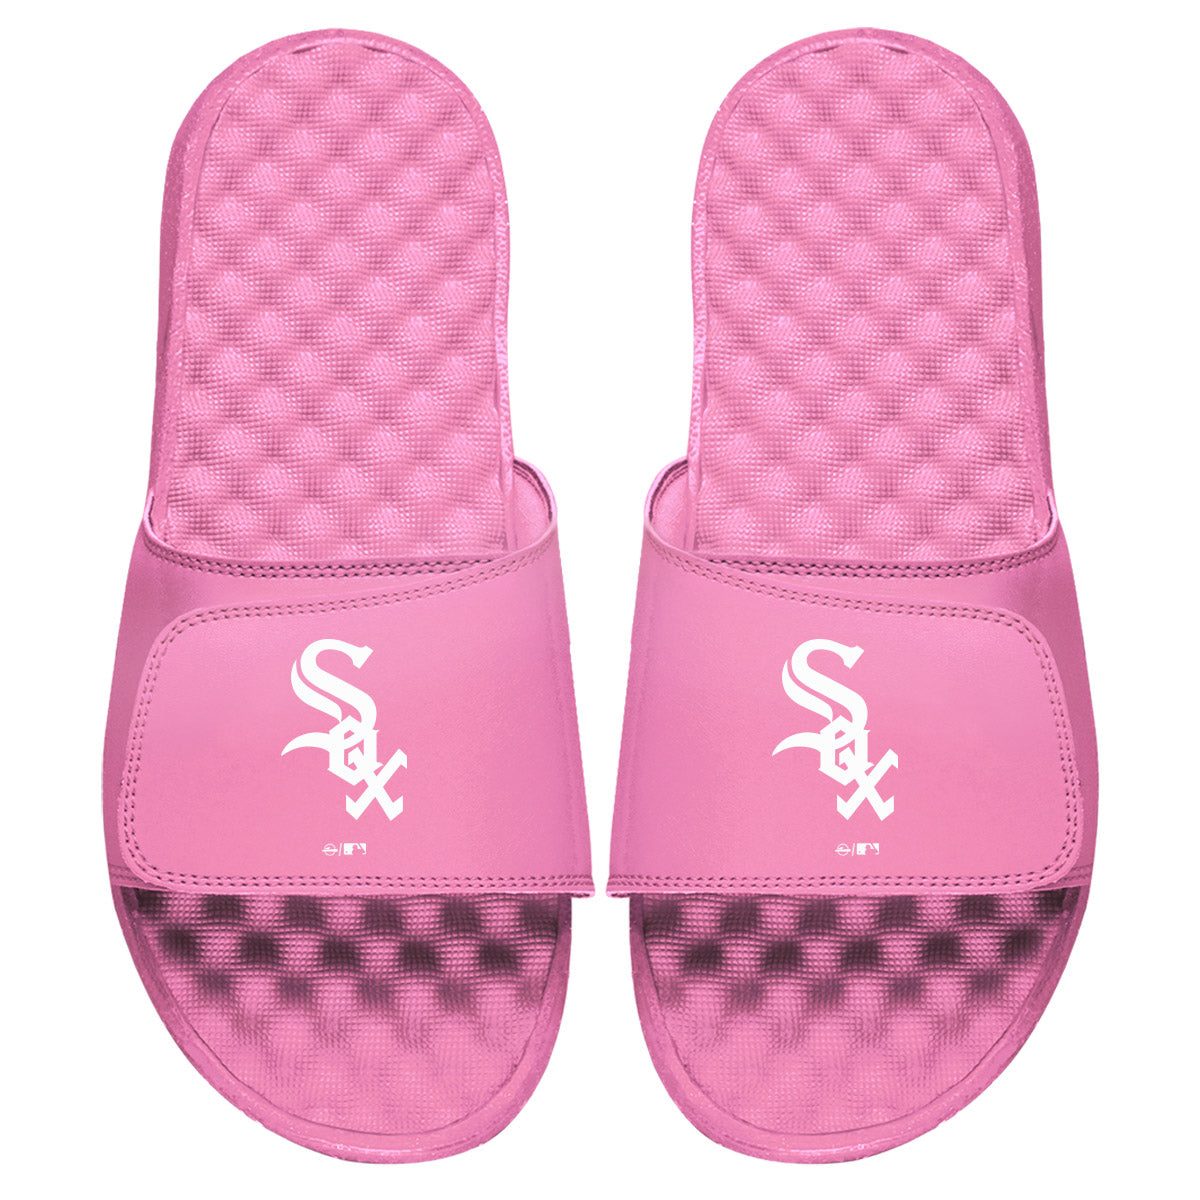 Chicago White Sox Primary Pink Slides